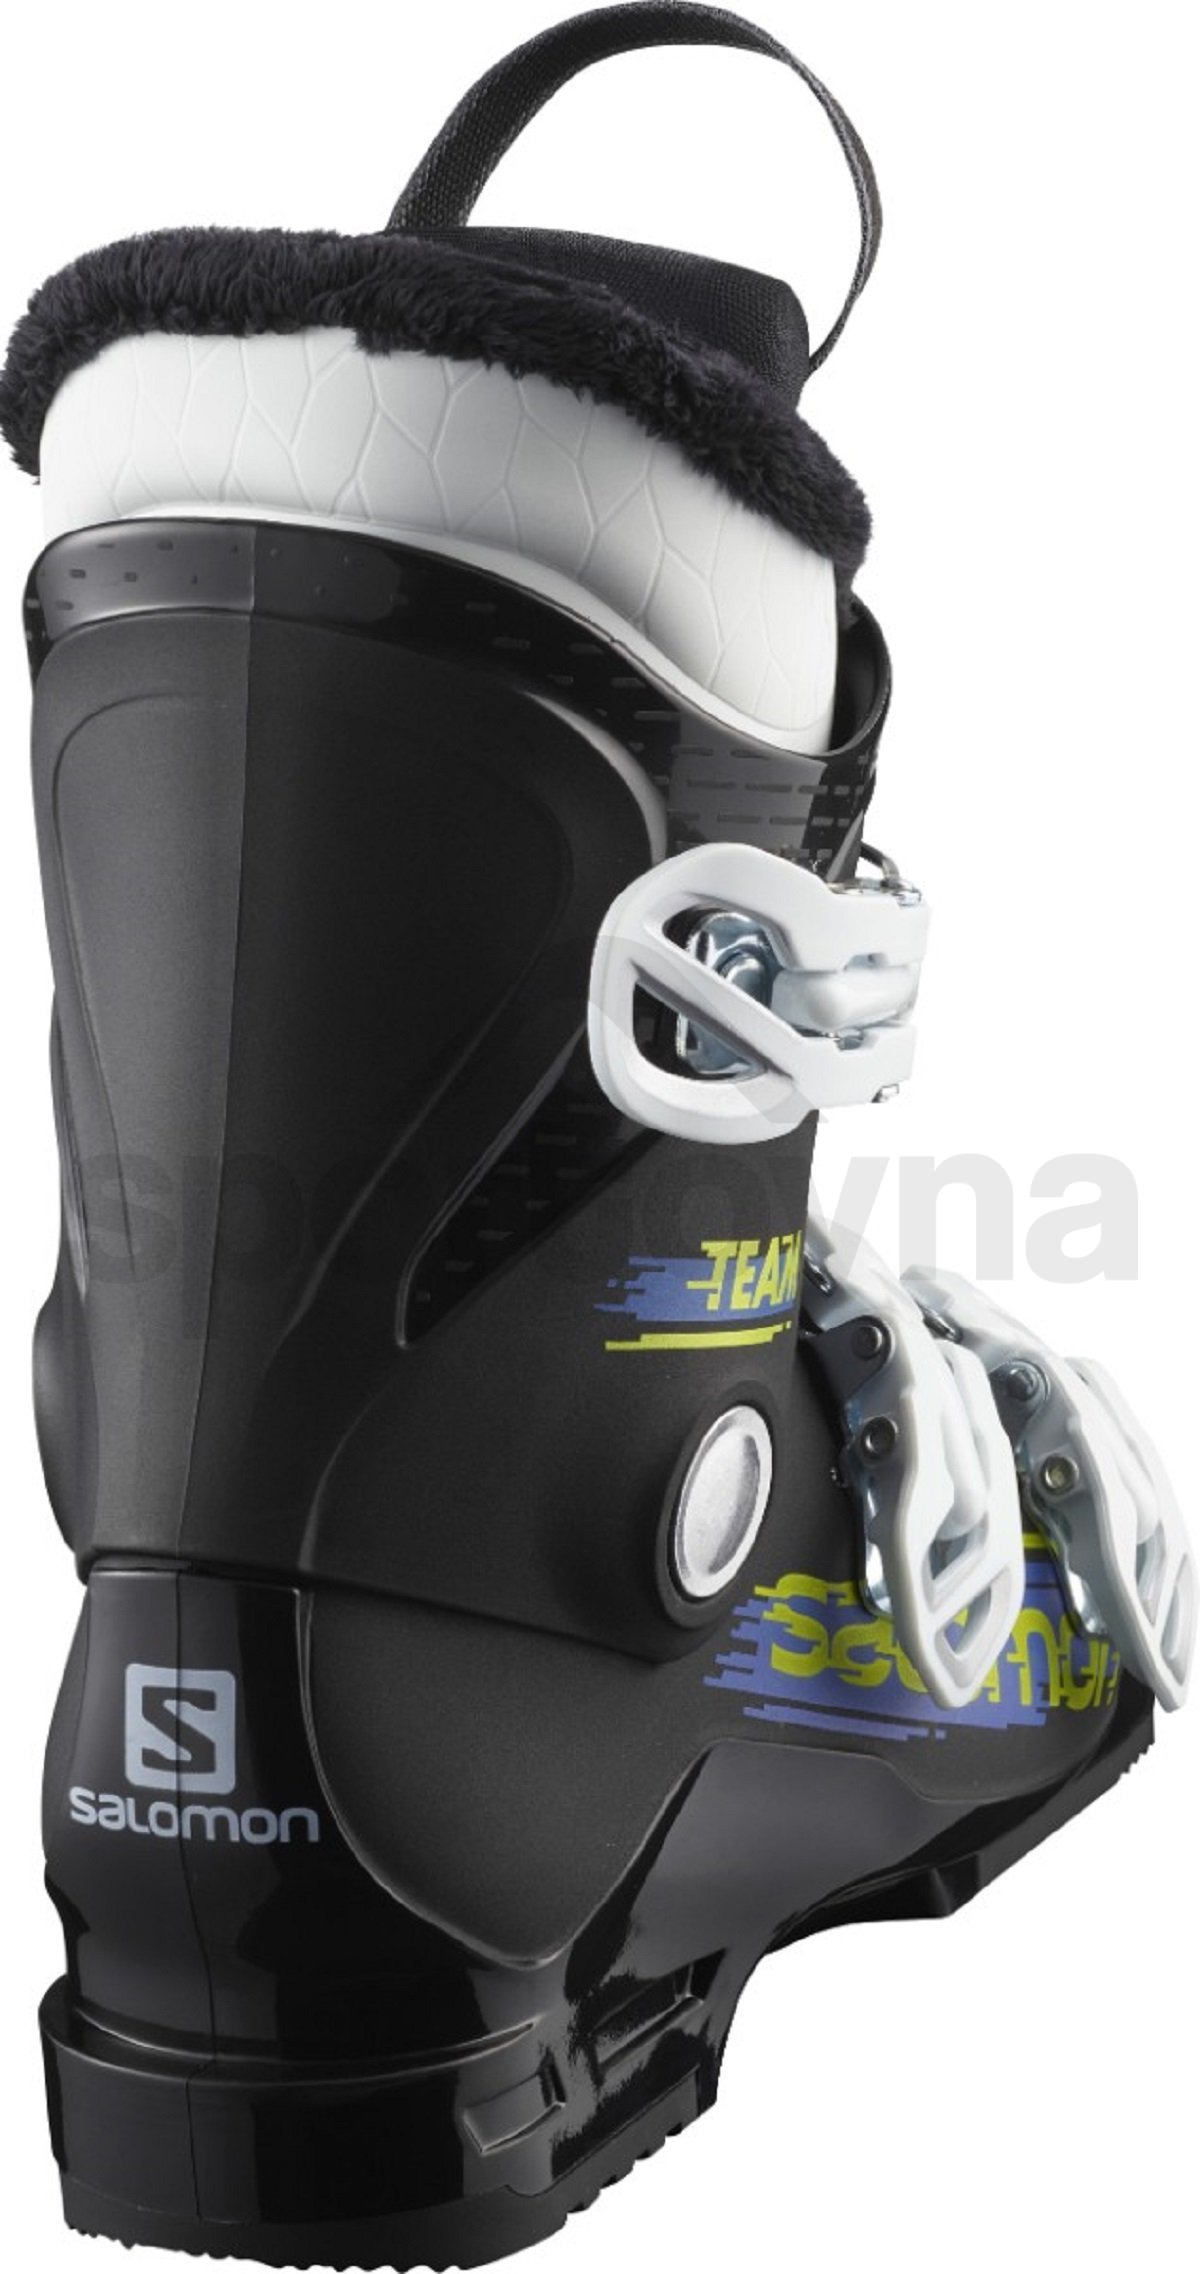 Lyžařské boty Salomon Team T3 - černá/bílá